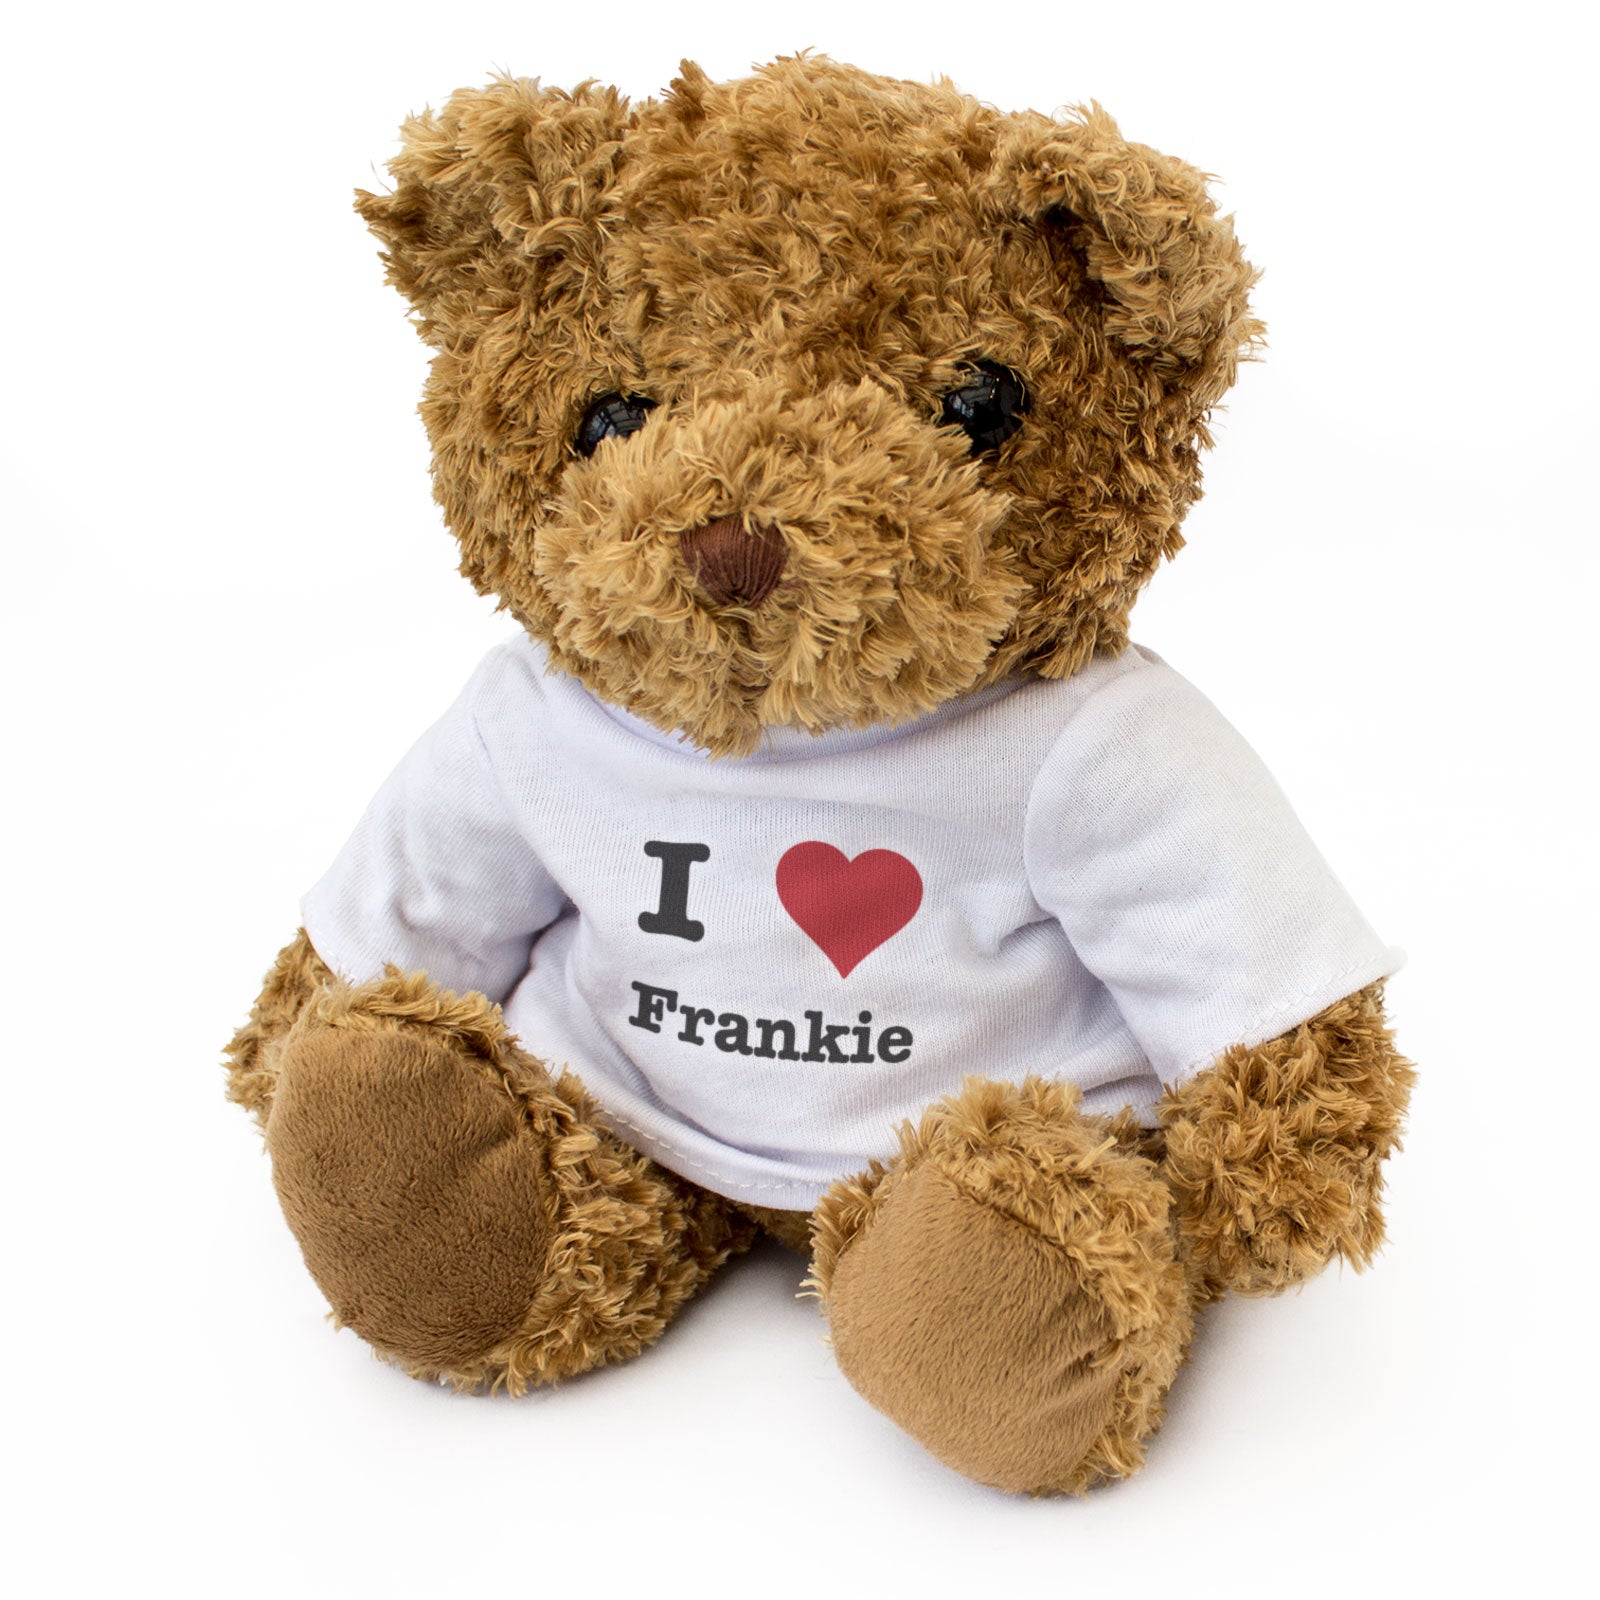 I Love Frankie - Teddy Bear